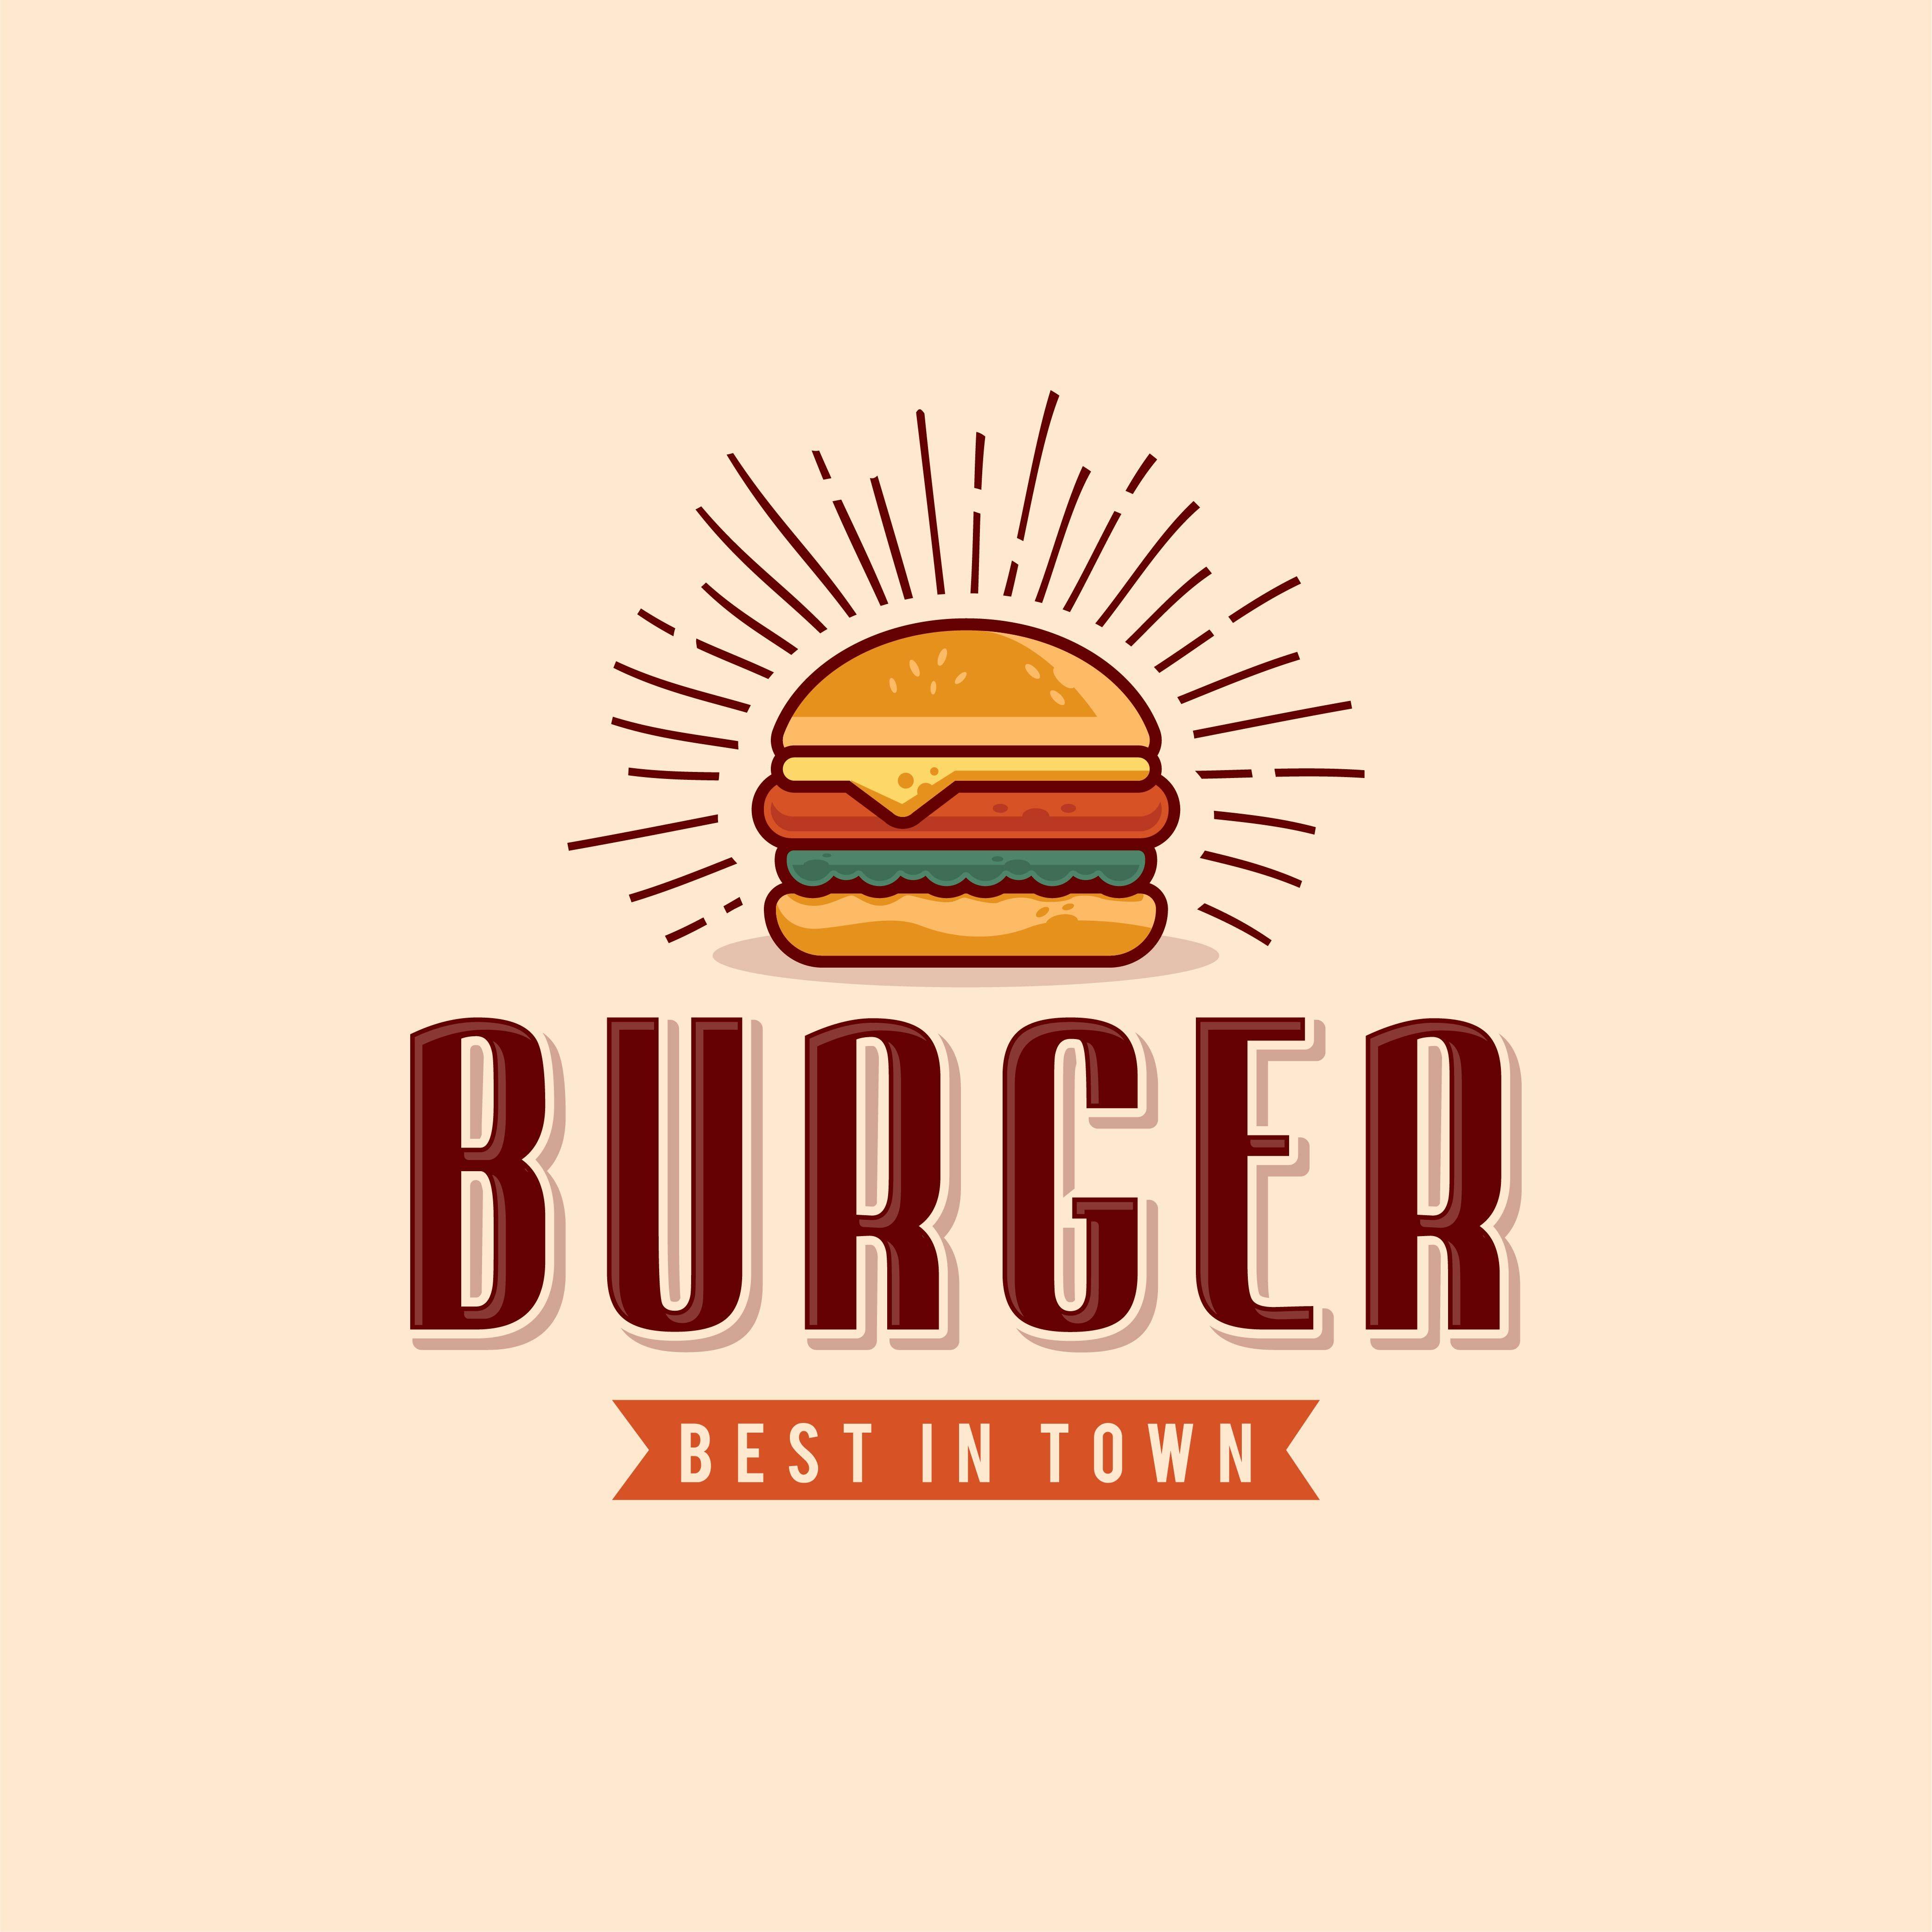 Hamburger Restaurant Logo - Stock burger, logo. #logo #burger #hamburger #restaurant #food